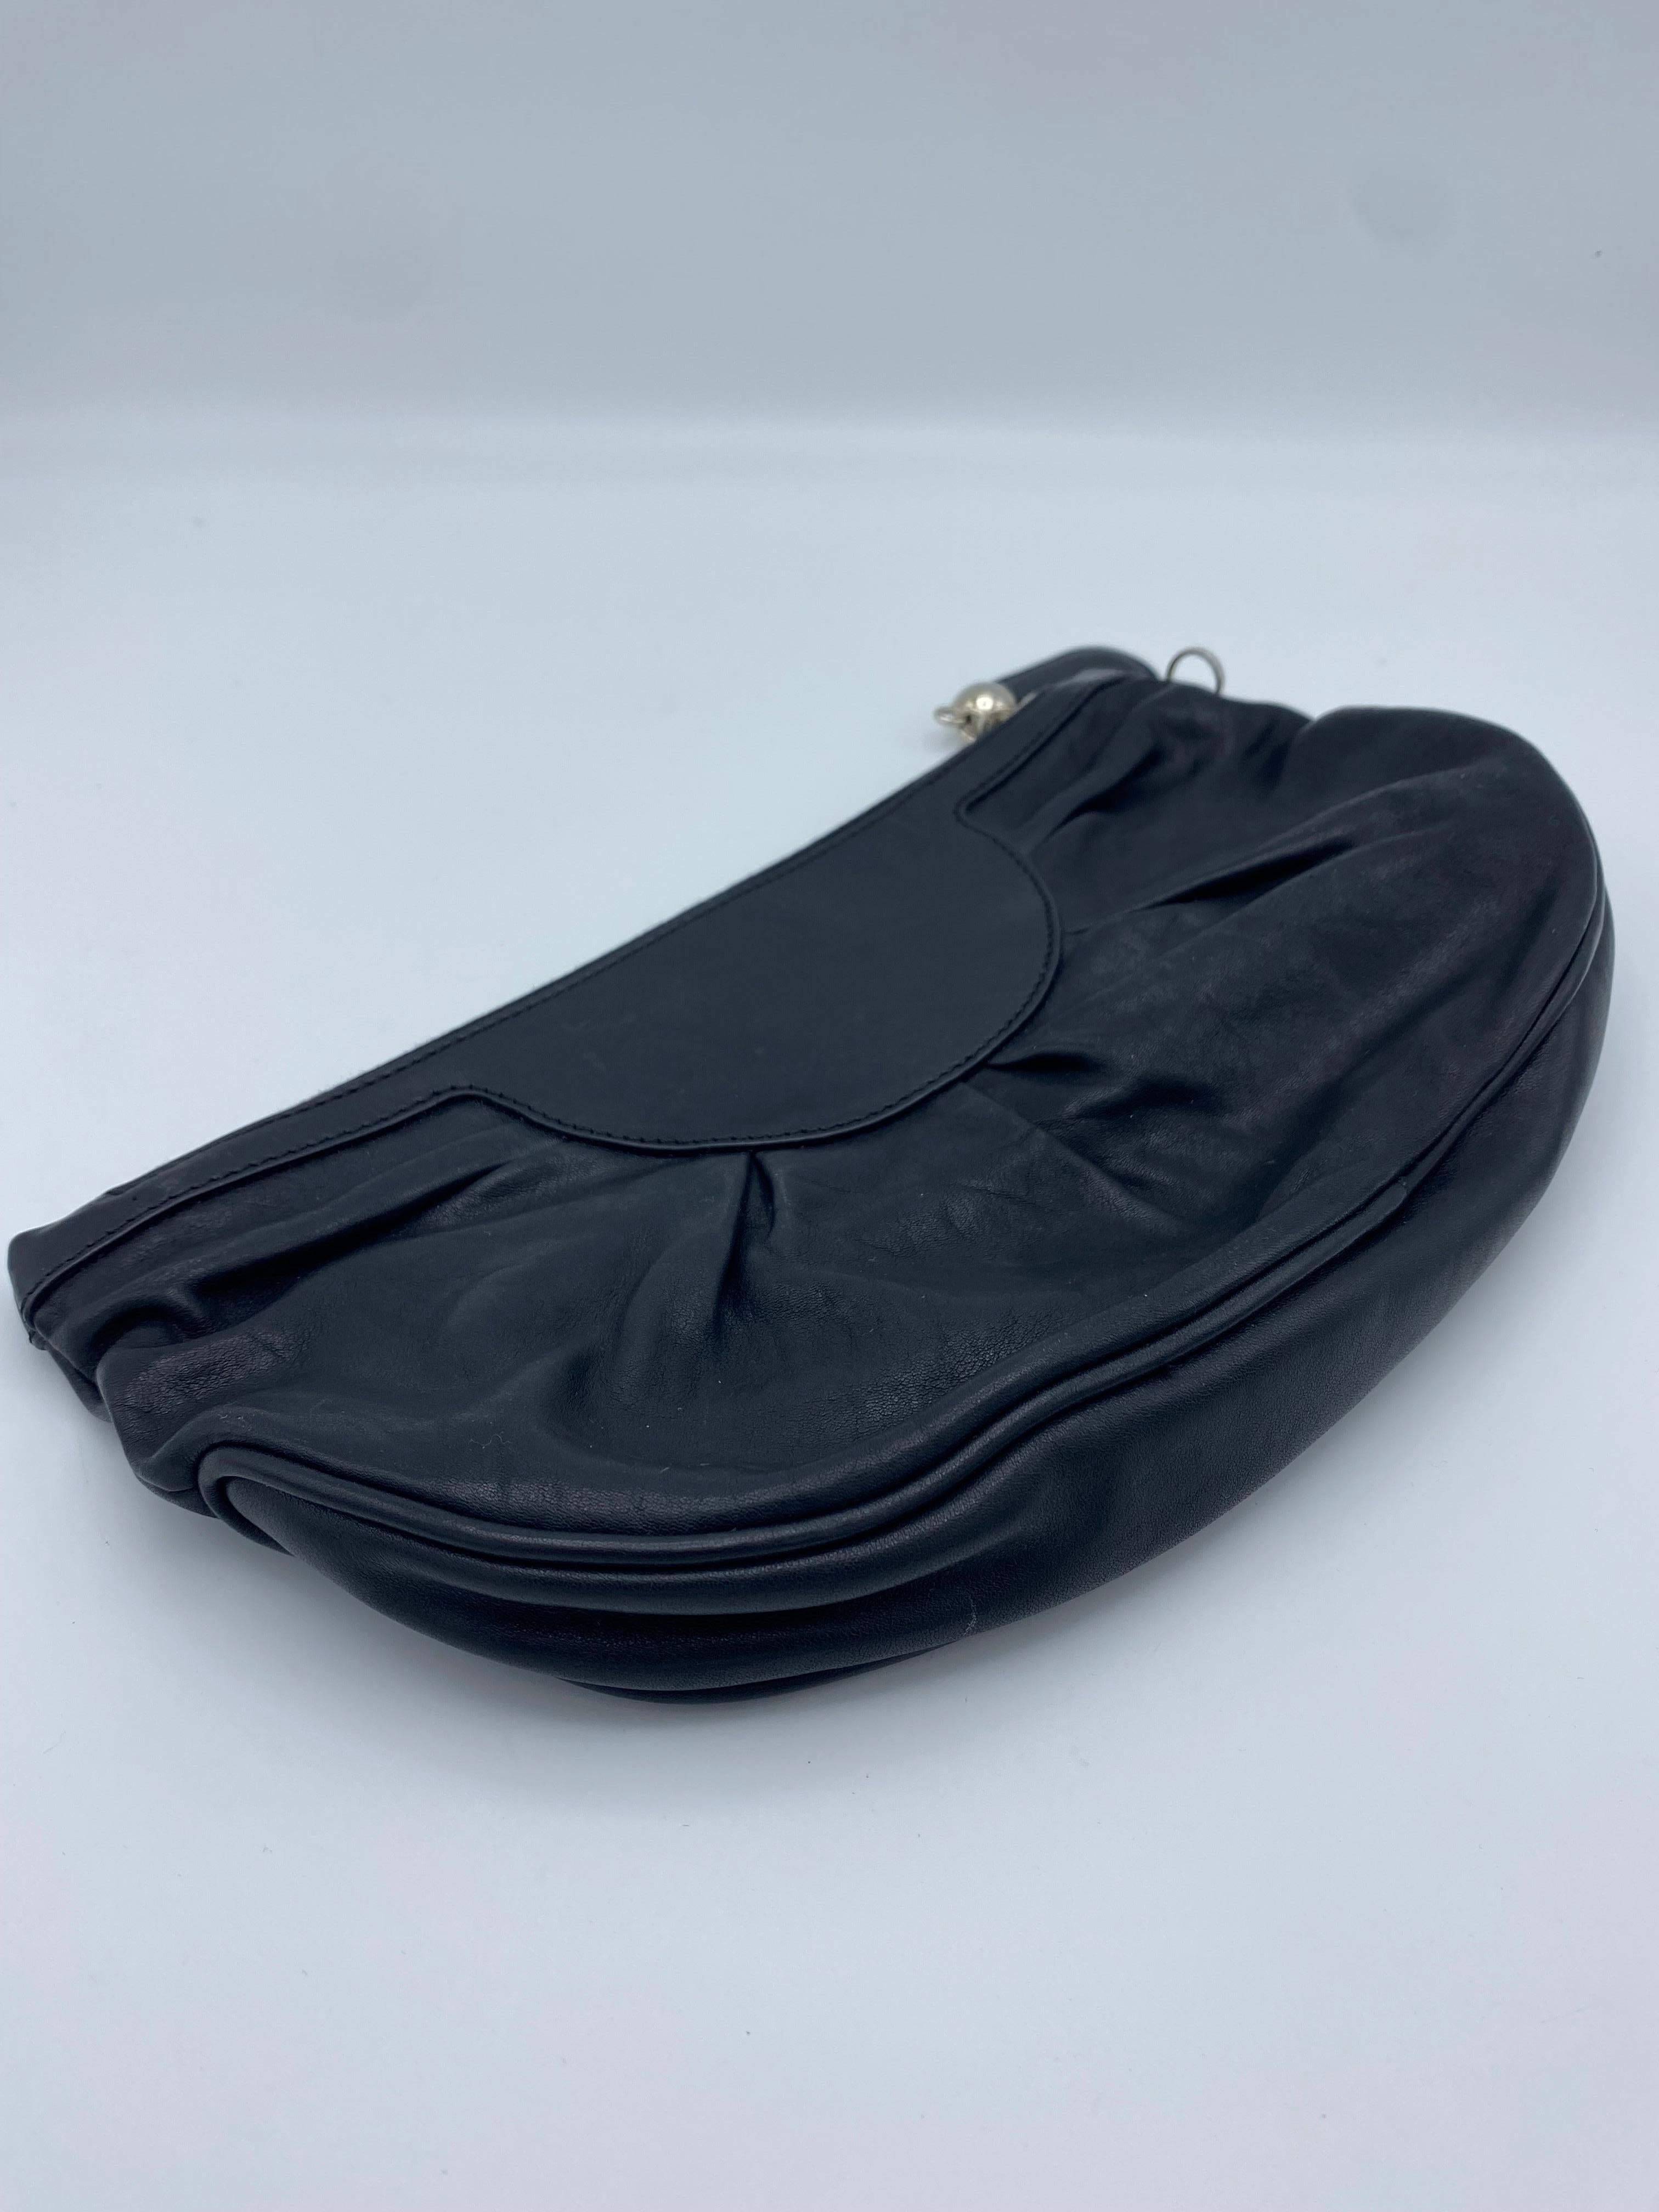 Women's or Men's Vintage Christian Dior Black Leather Clutch Purse 